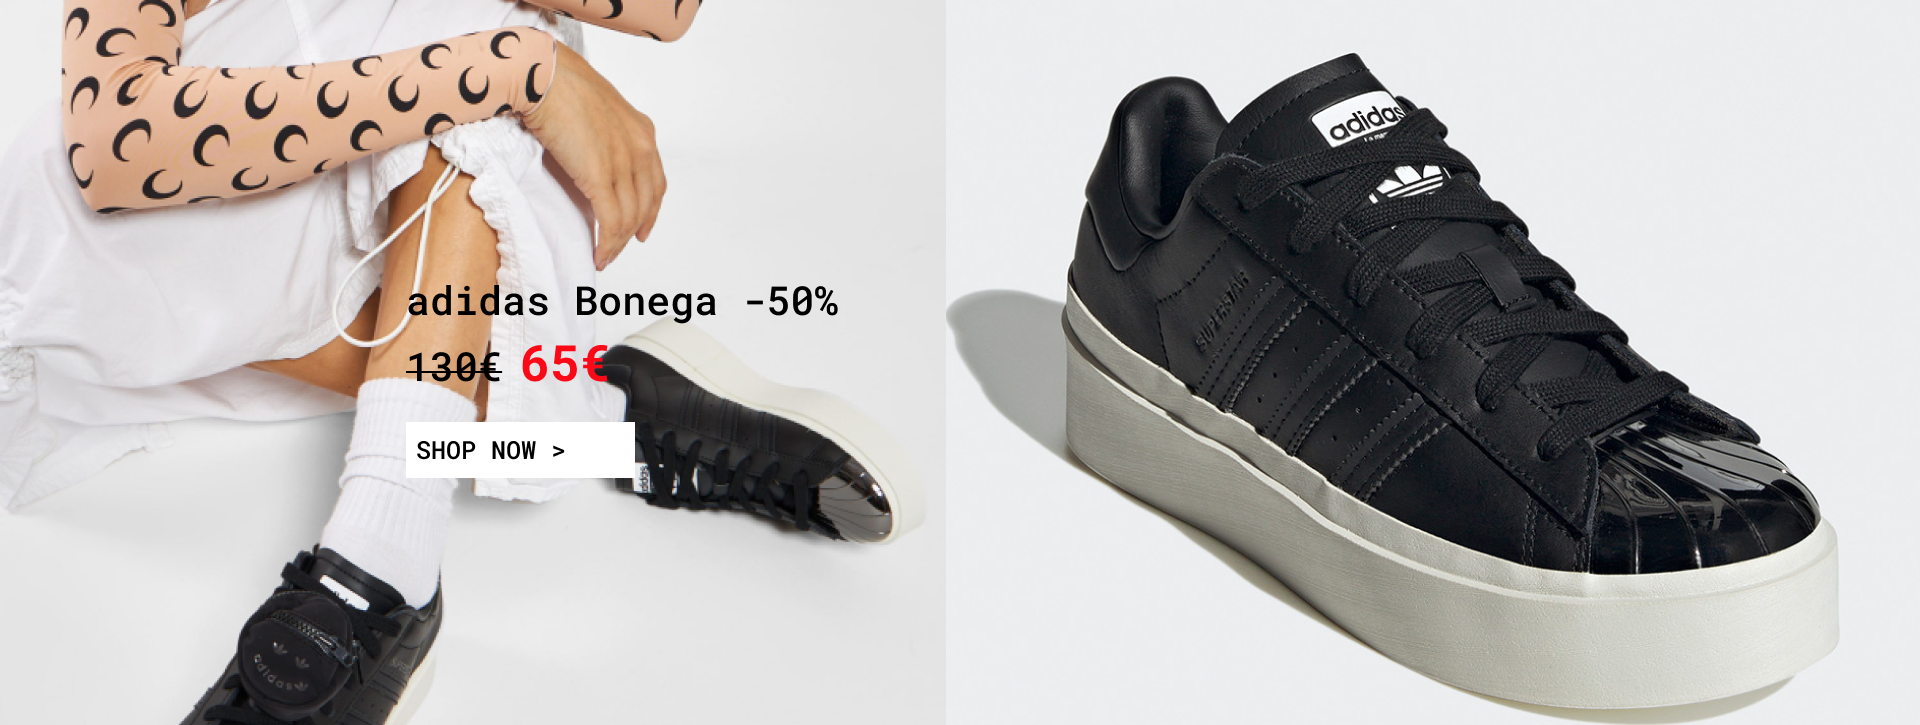 adidas Originals Superstar -50%